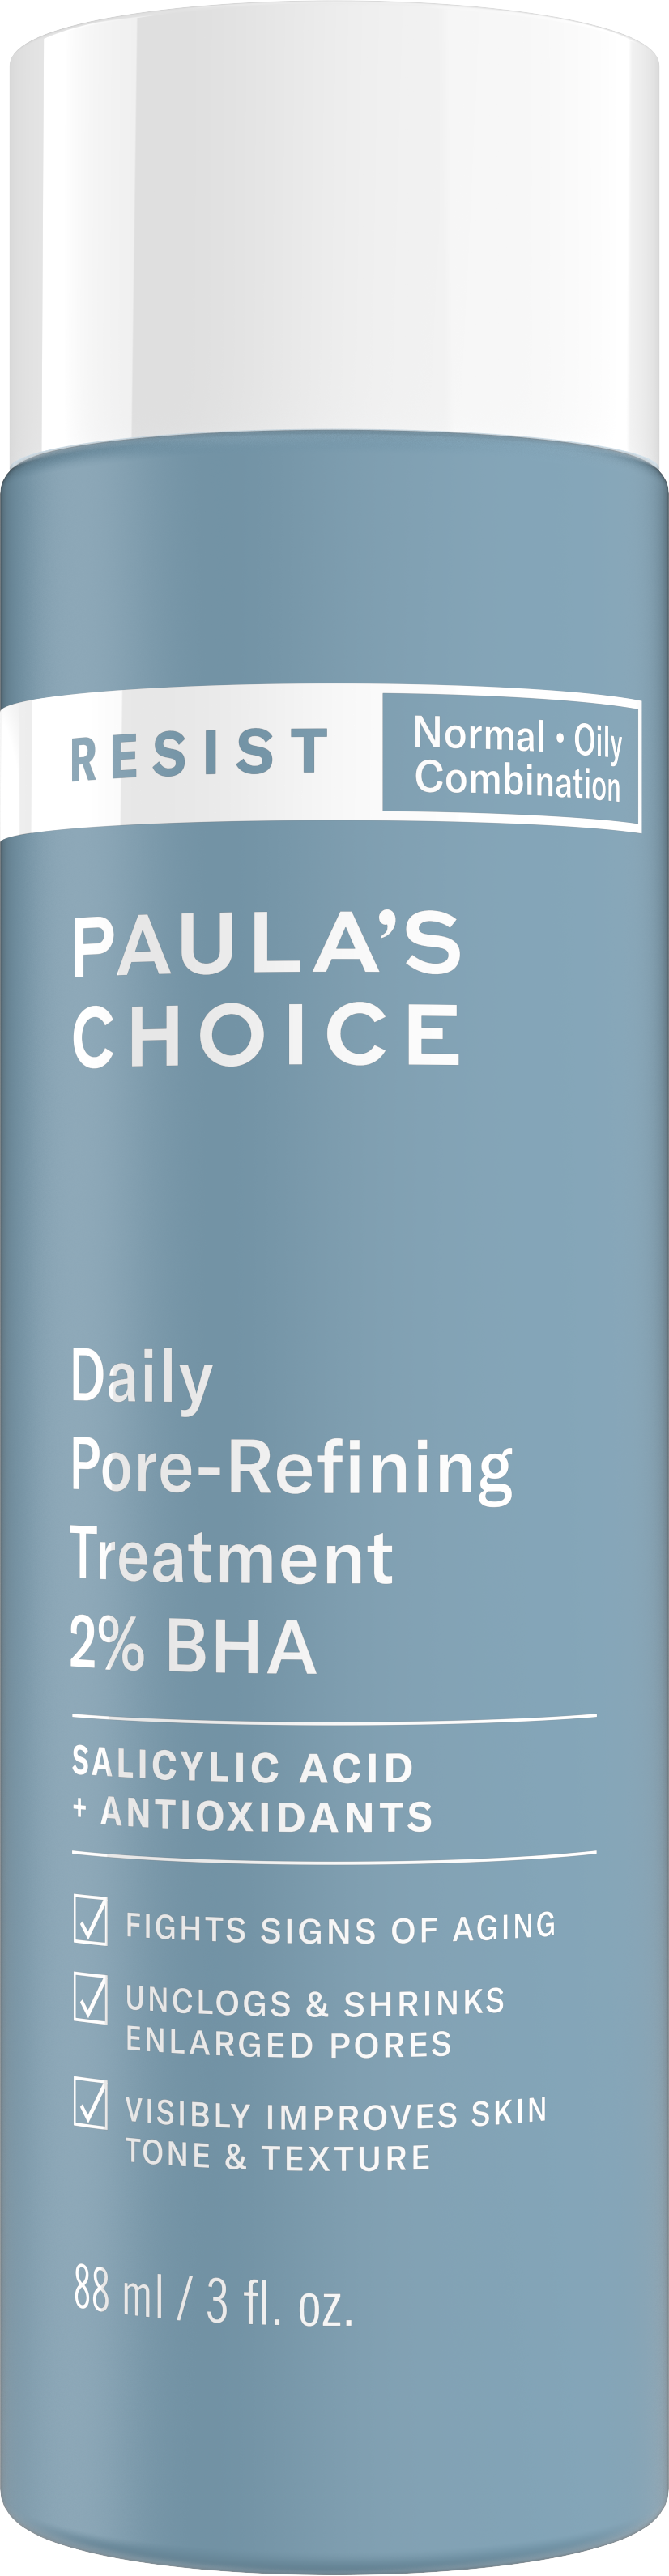 Paula's Choice RESIST Daily Pore-Refining Treatment 2% BHA